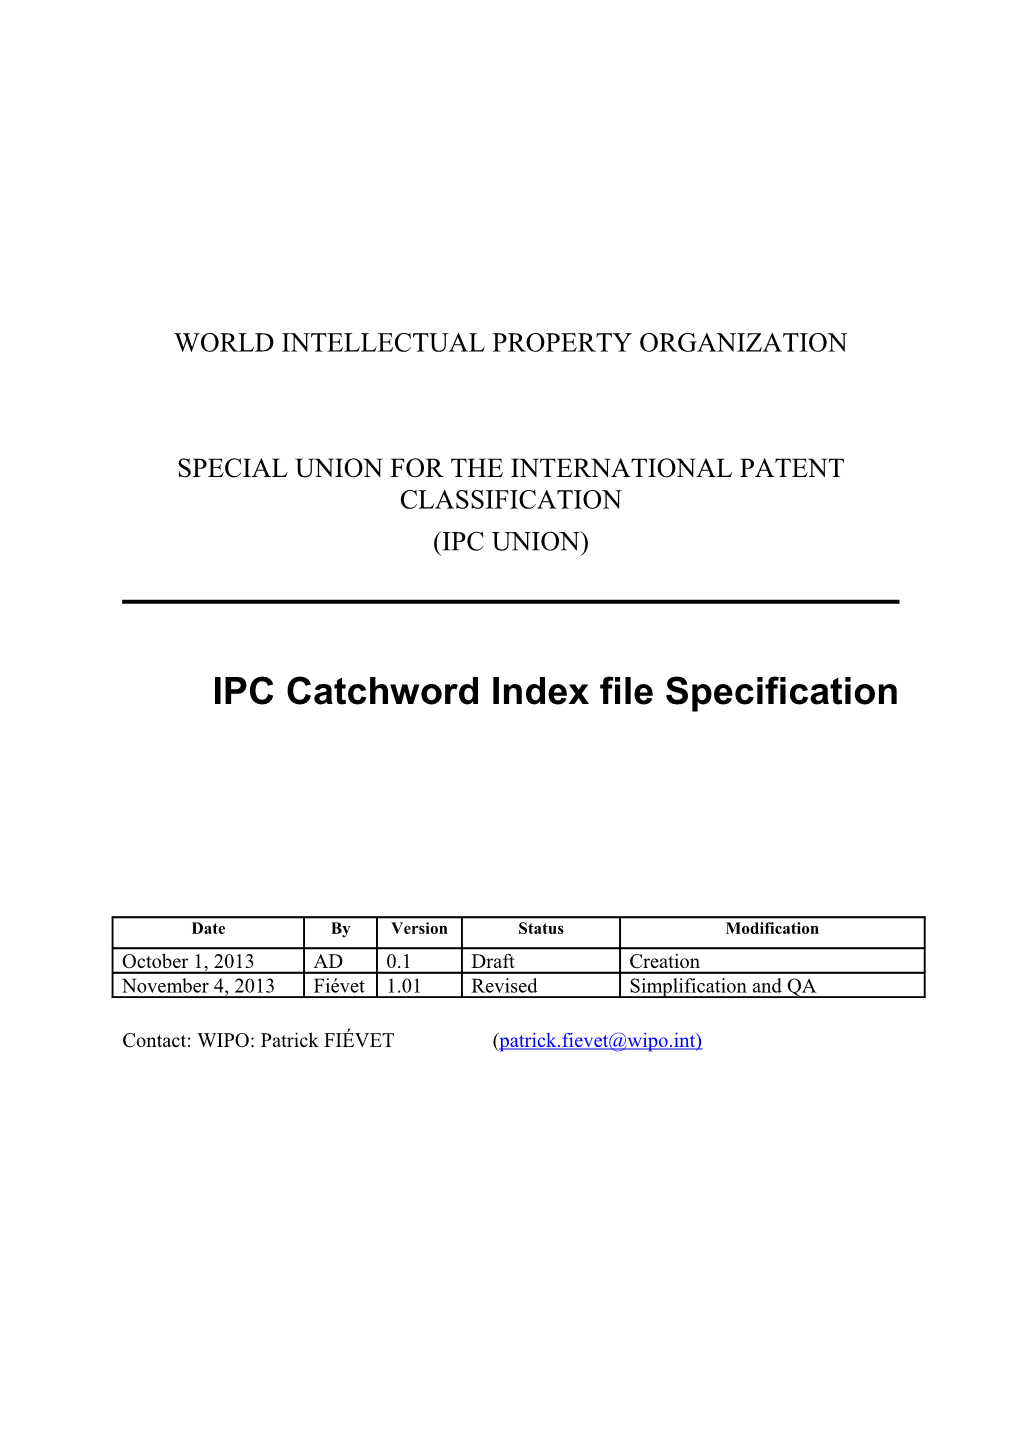 IPC Catchword Index File Specification